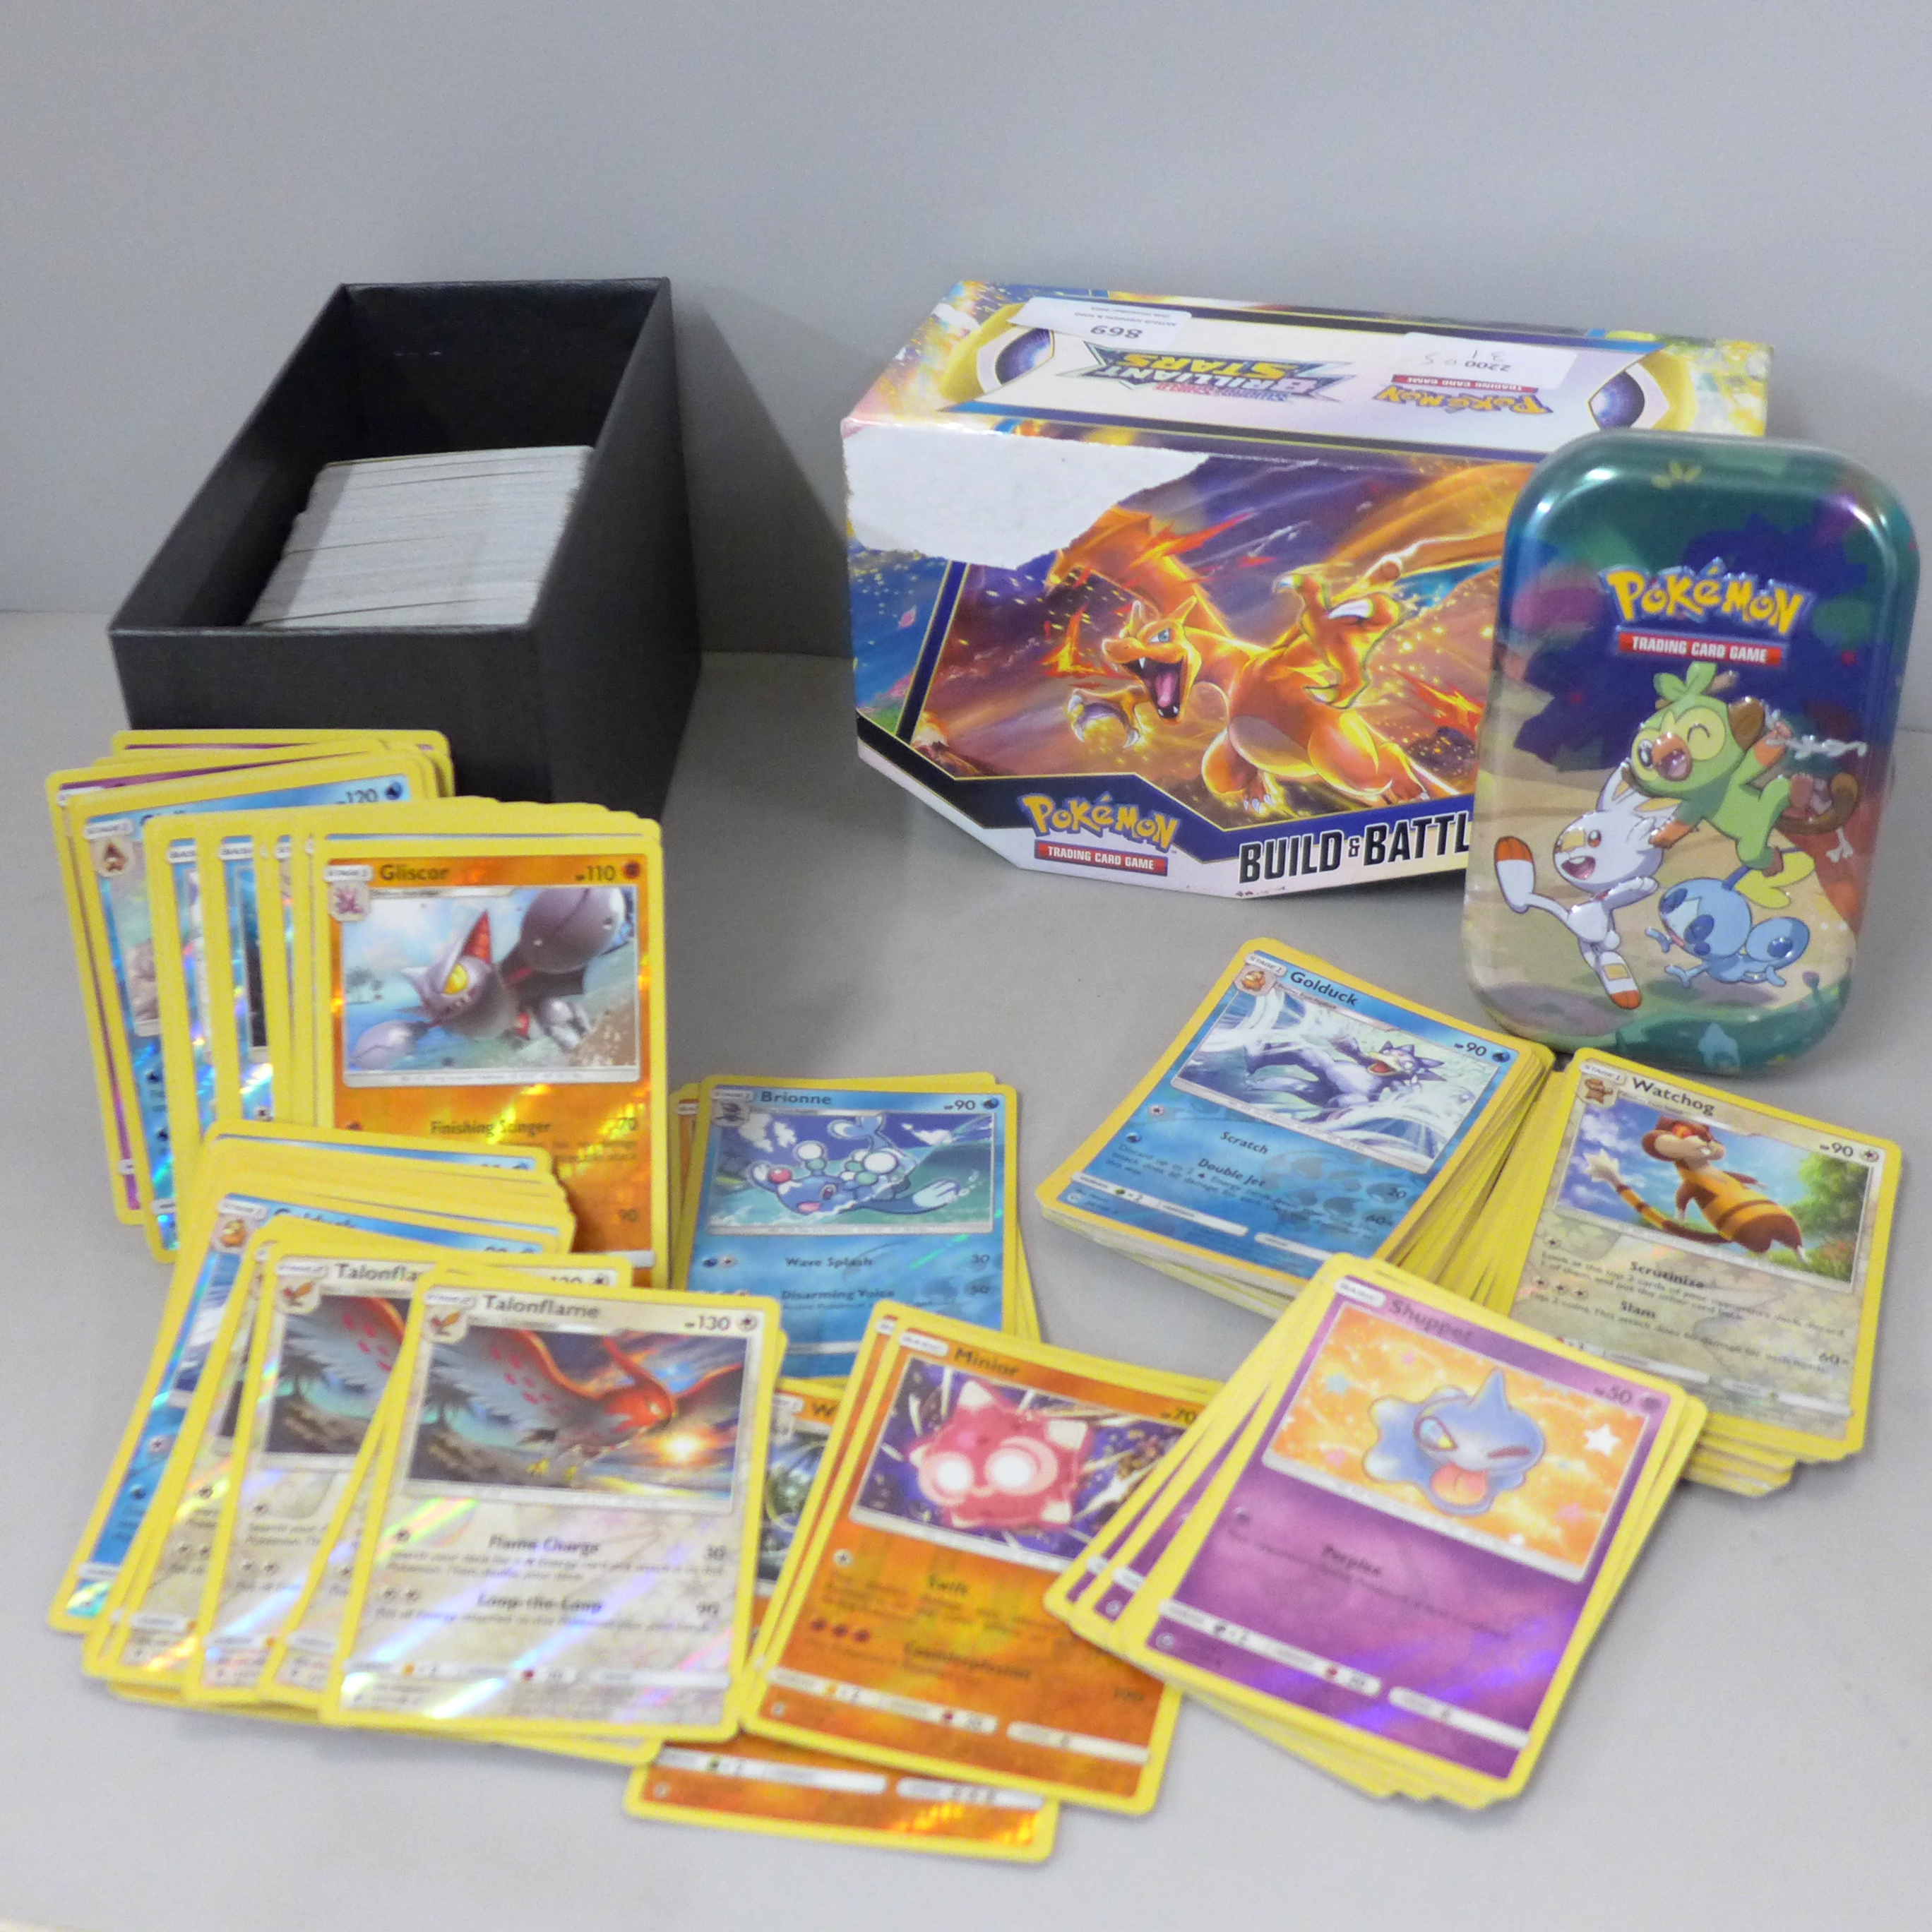 Over 400 shiny Pokemon cards and tin